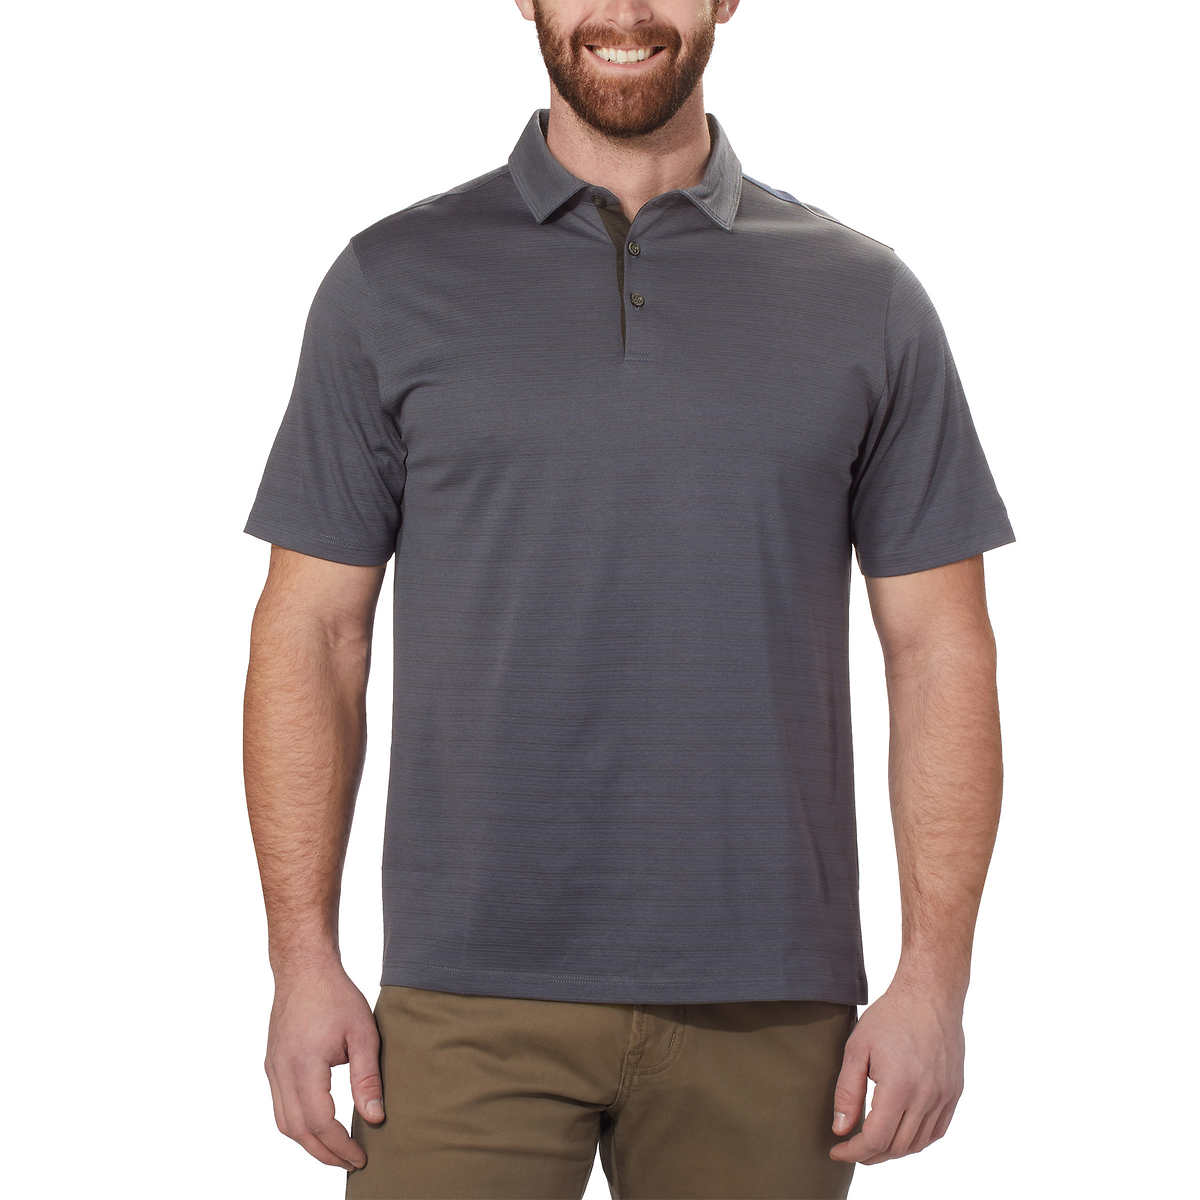 Kirkland Signature Men's Cotton Poly Polo Shirt (Grey, XX-Large)